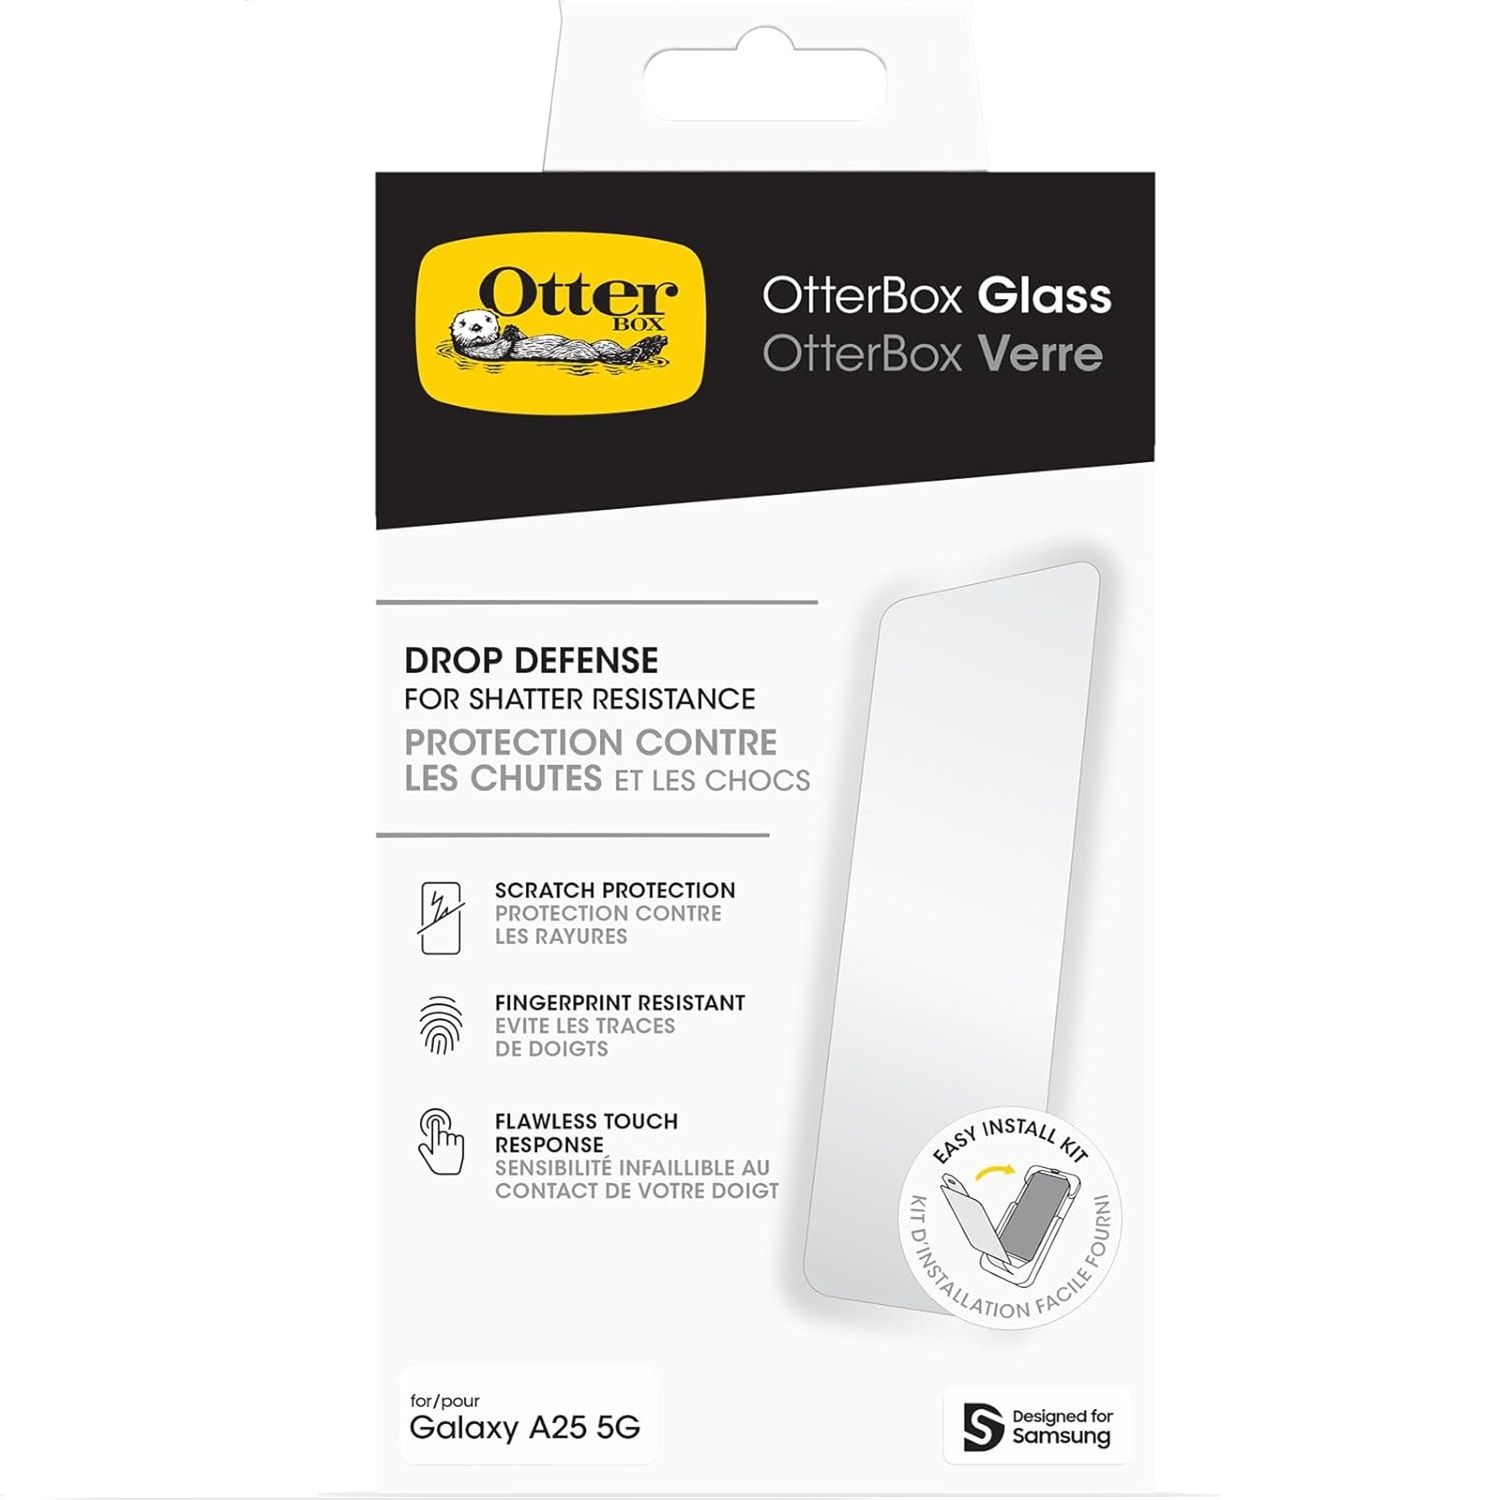 Protetor de tela de vidro OtterBox para Galaxy A25 5G na embalagem